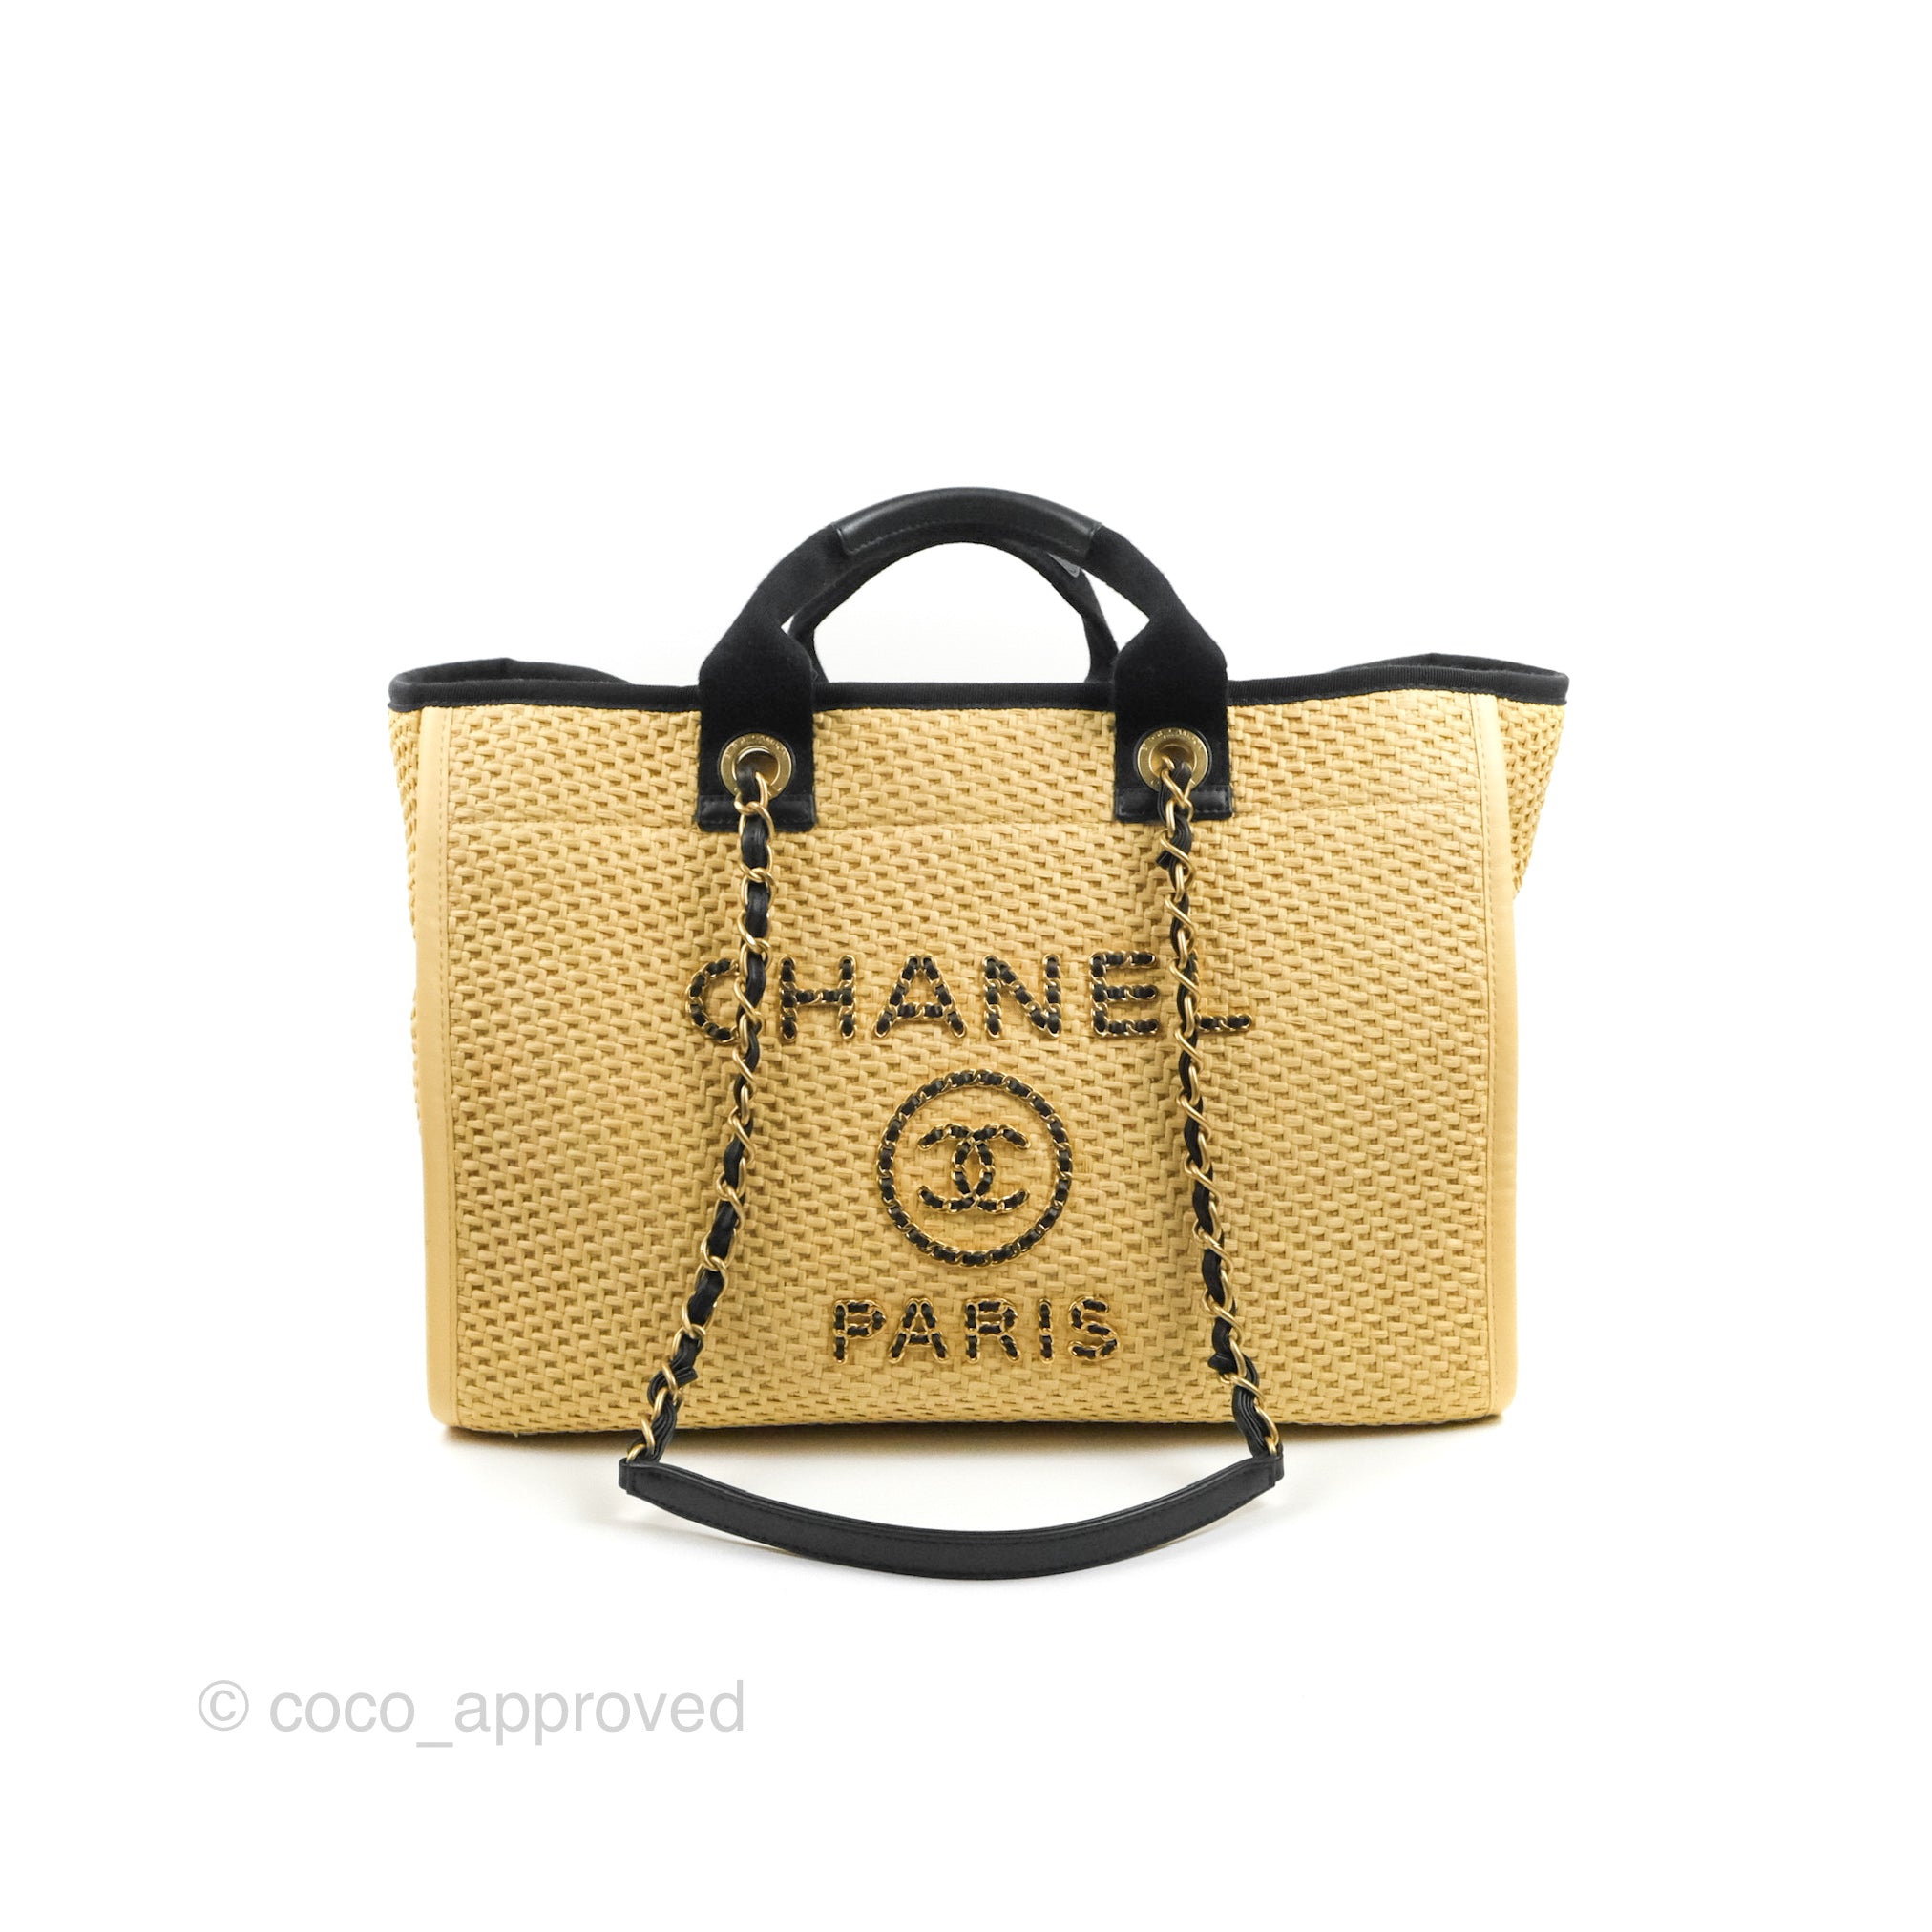 chanel deauville beach bag